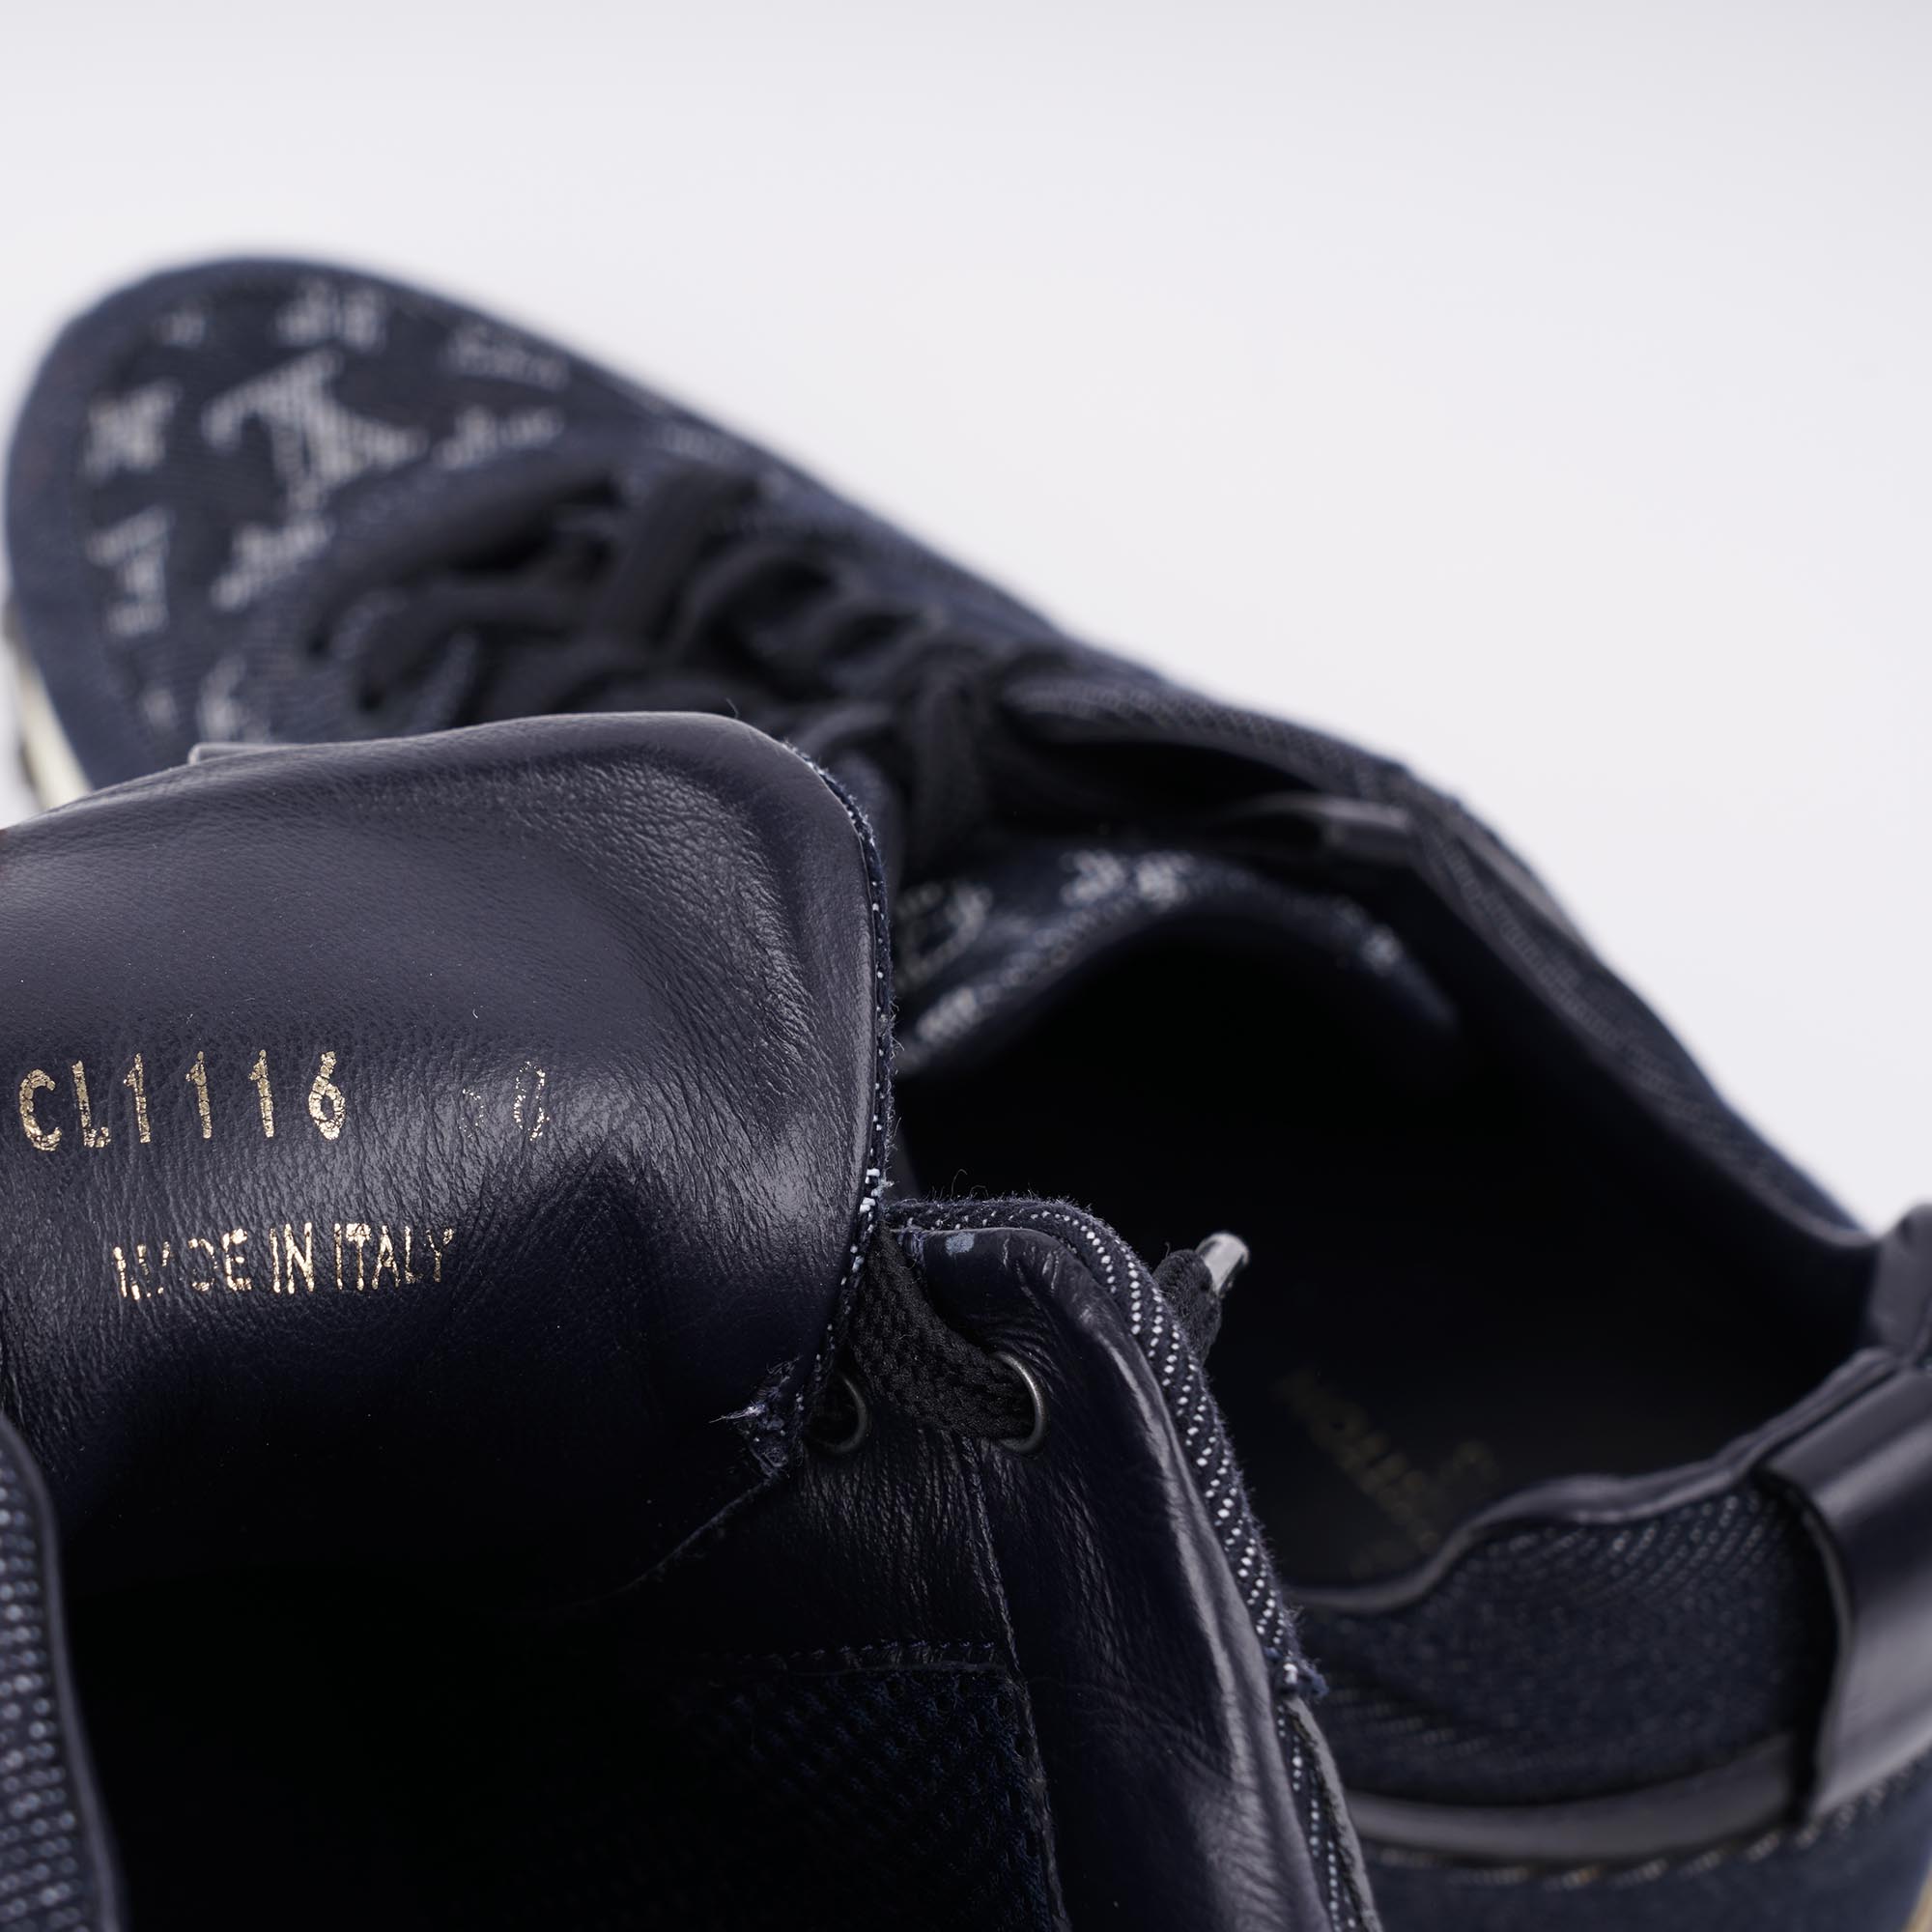 Run Away Sneakers Denim 38 - LOUIS VUITTON - Affordable Luxury image